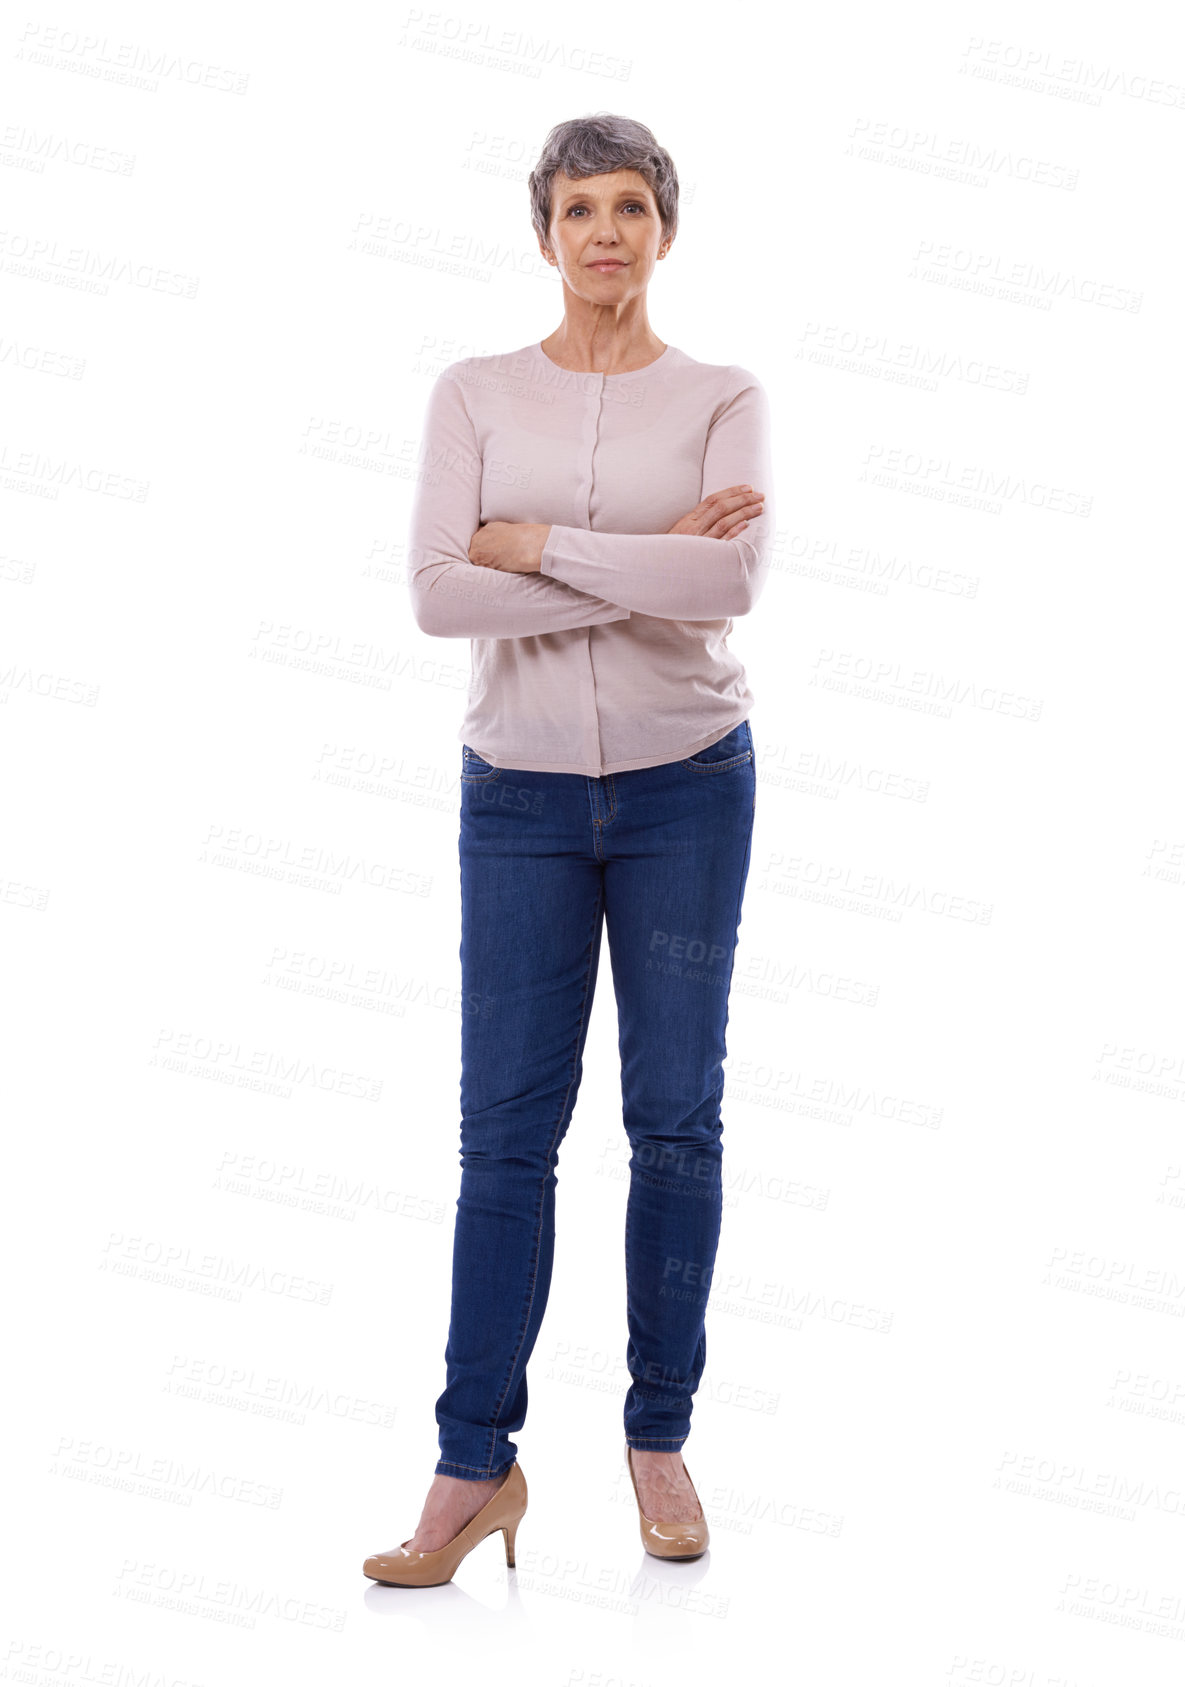 Buy stock photo Studio portrait of a confident mature woman against a white background